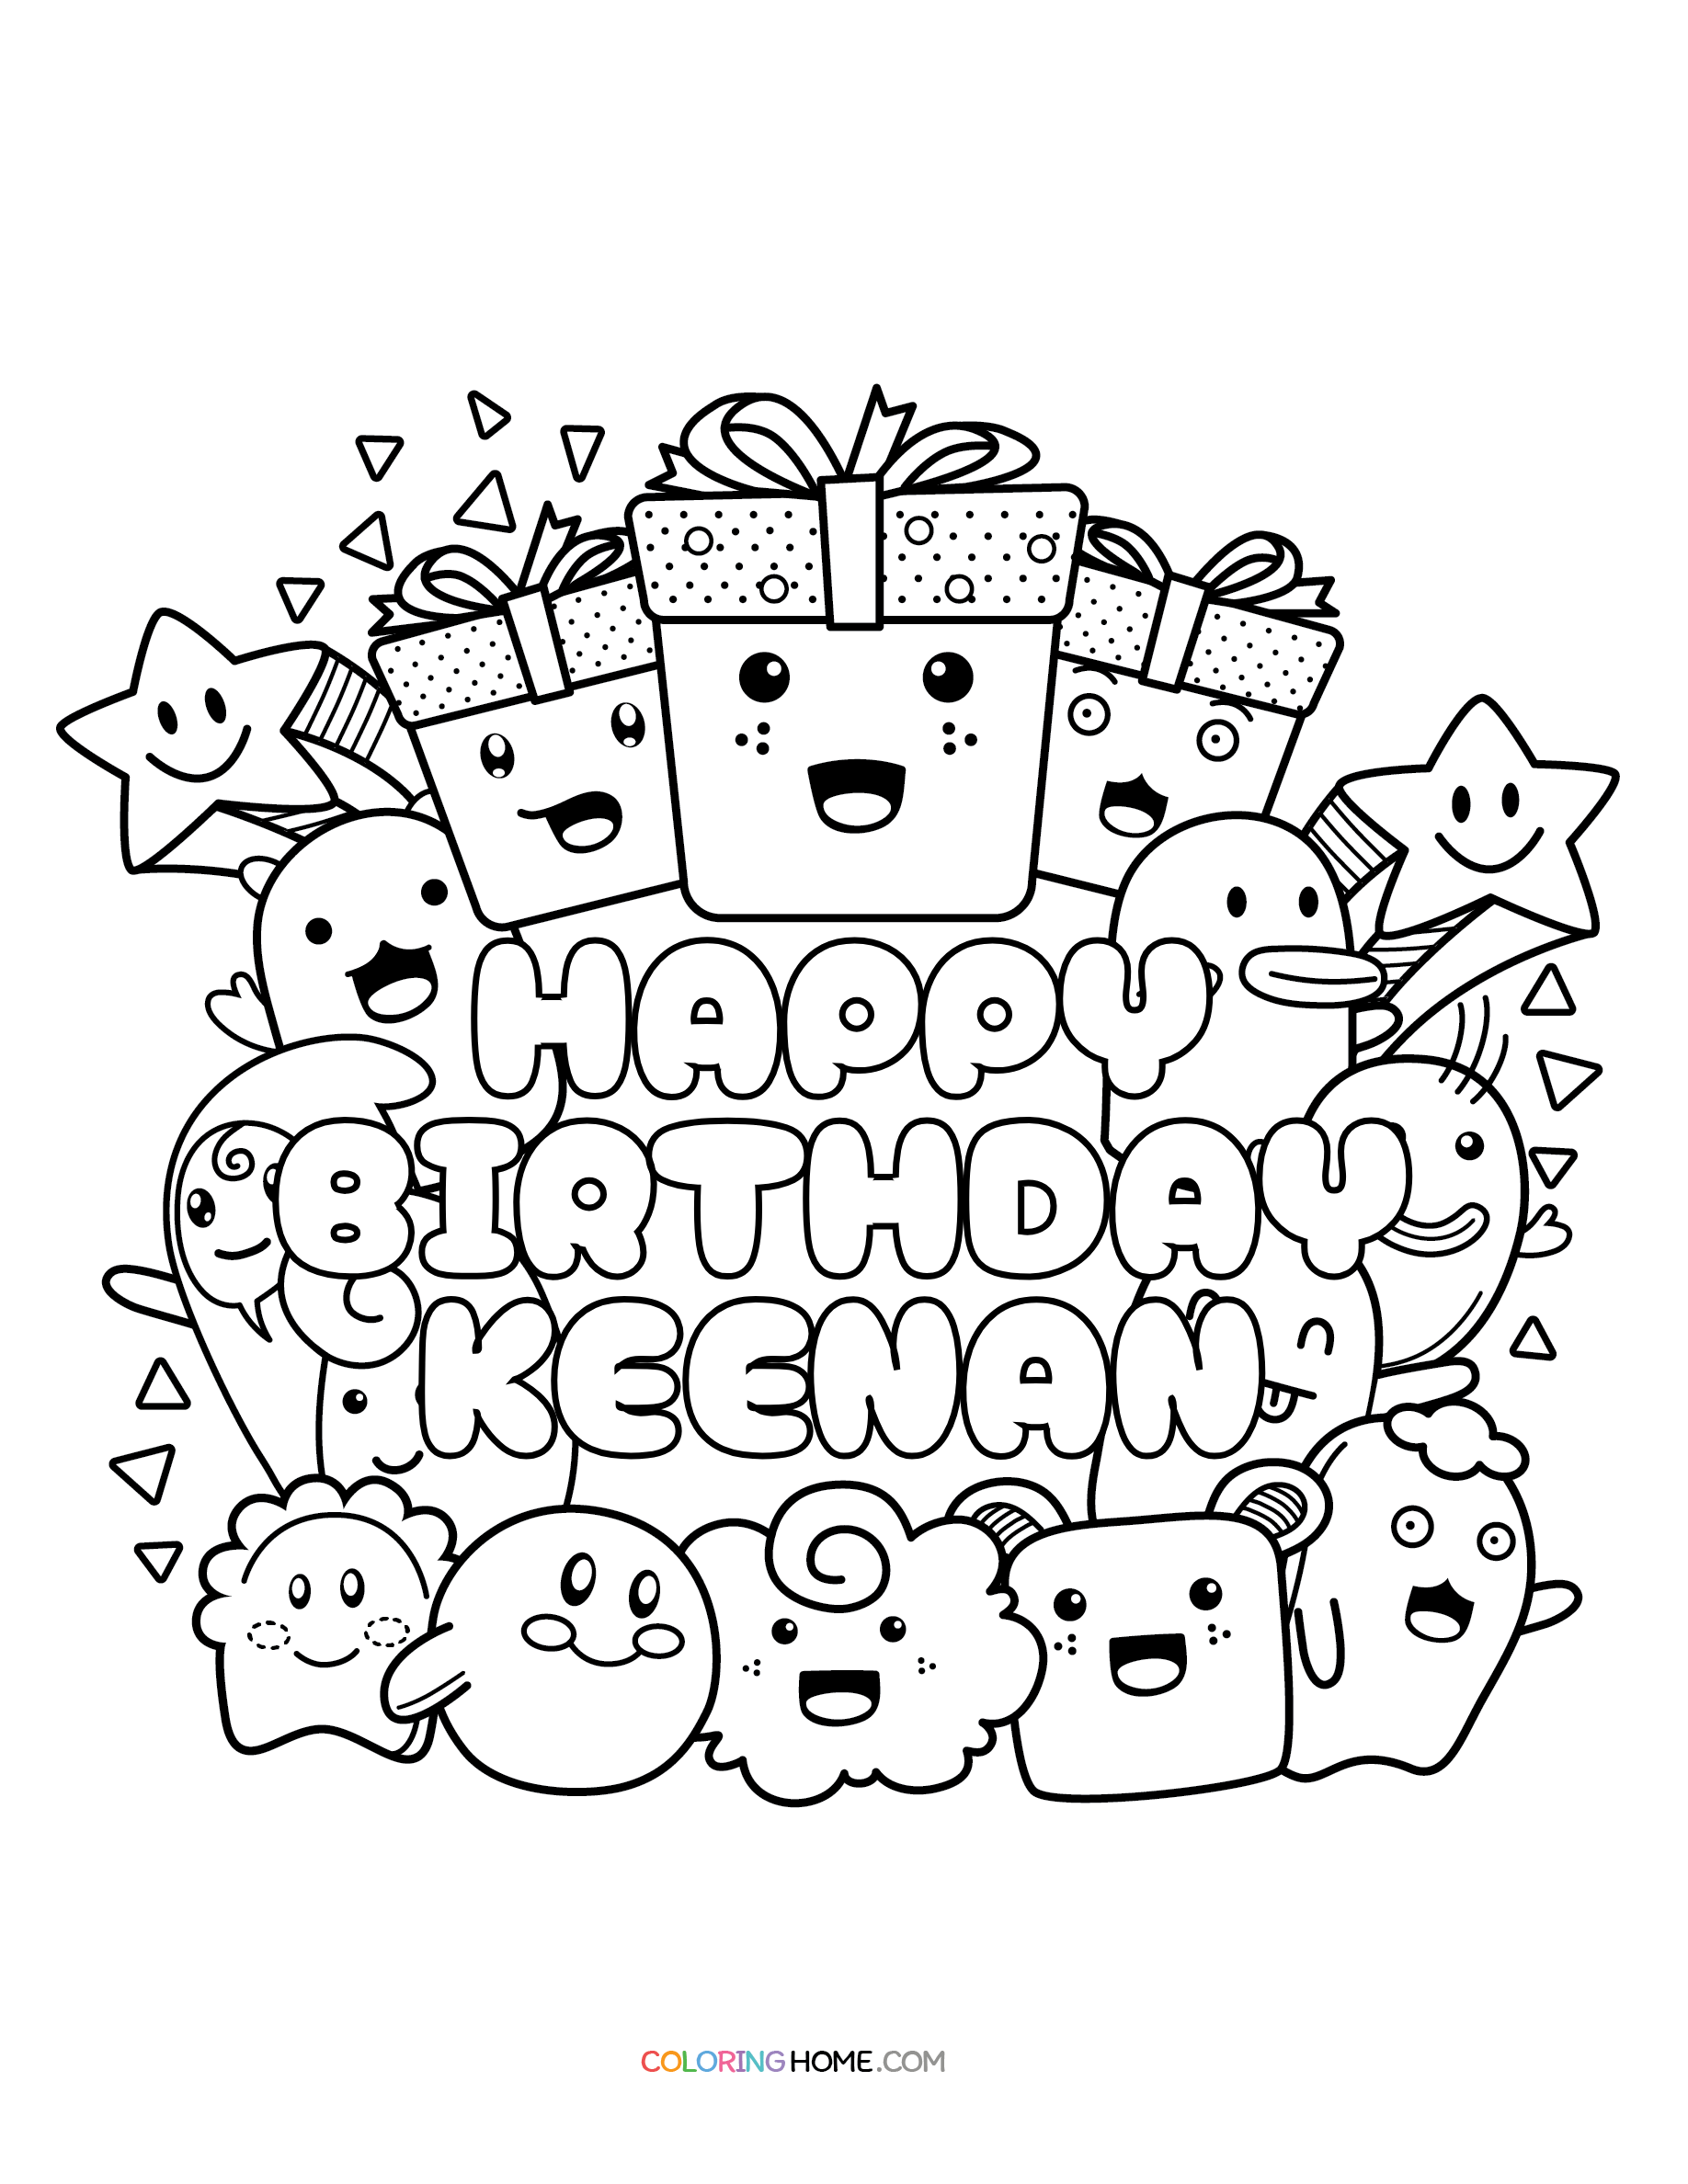 Happy Birthday Keenan coloring page